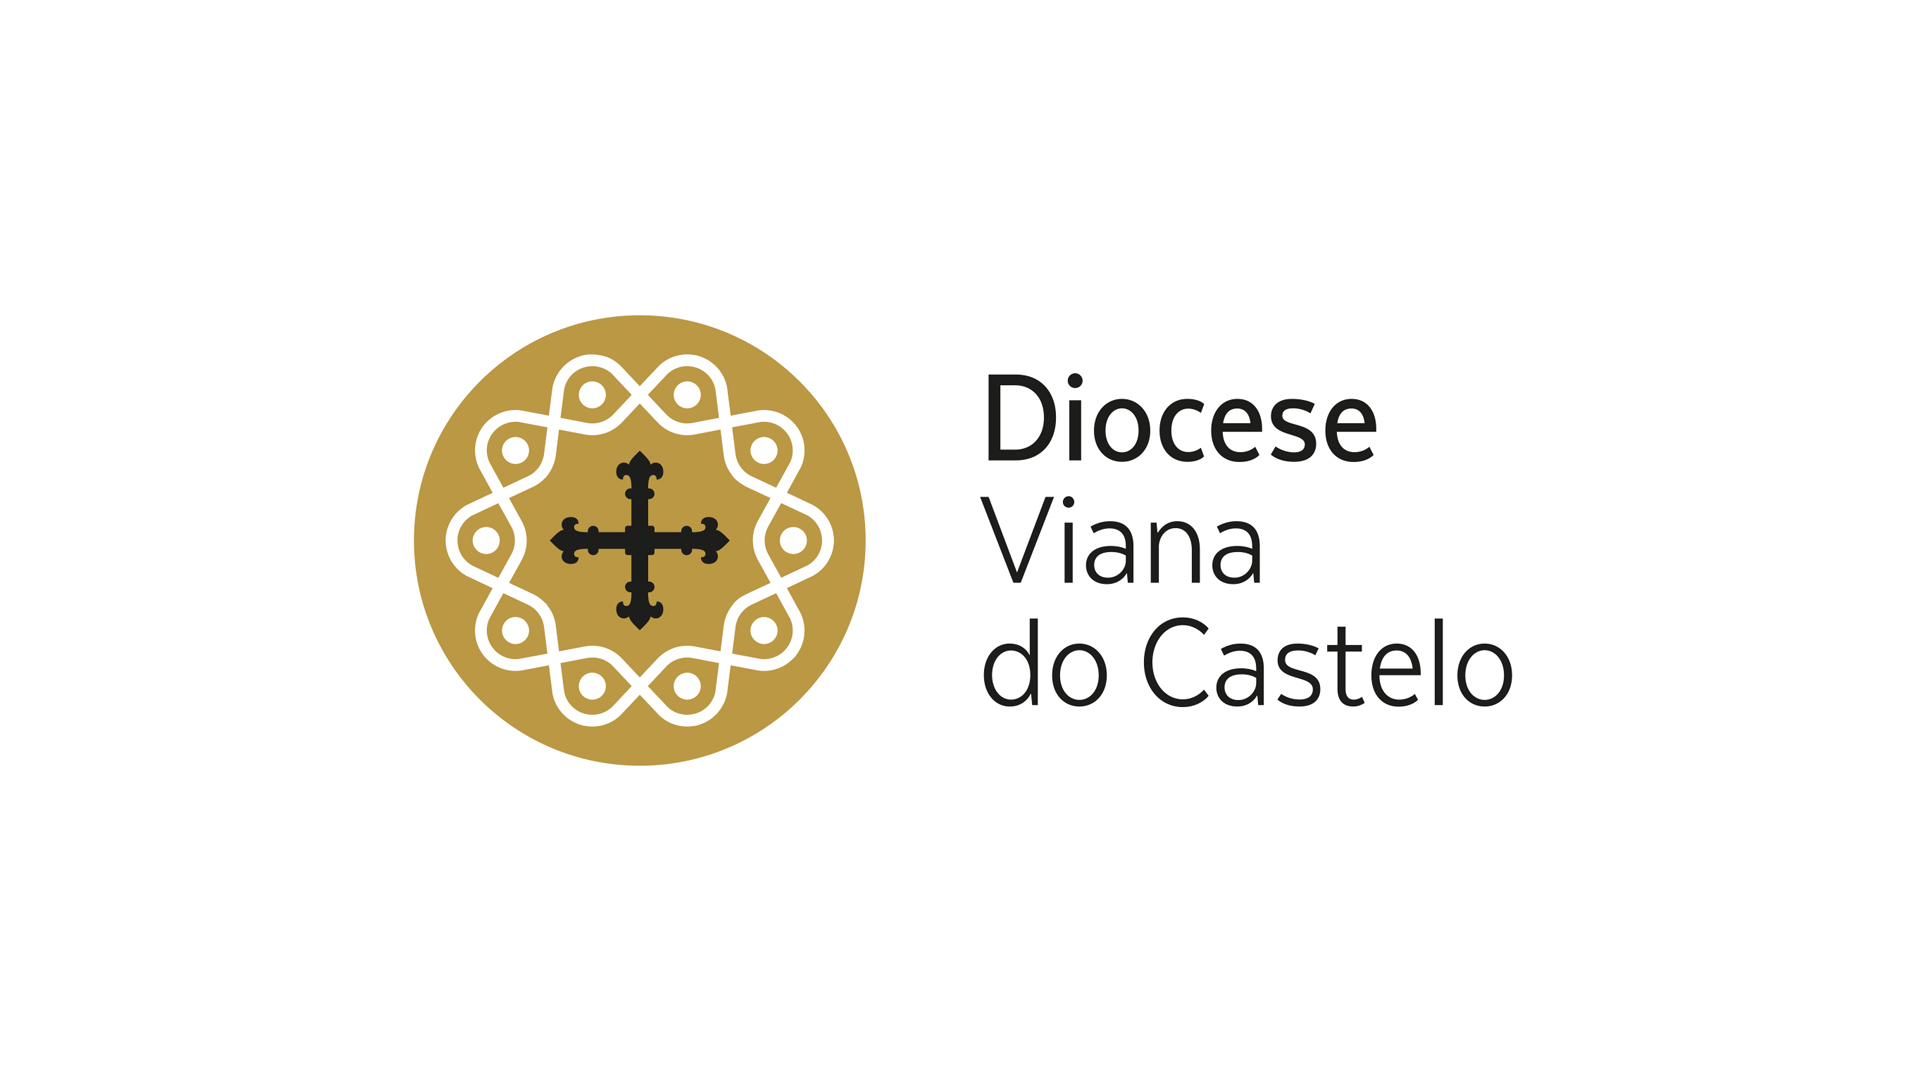 Diocese de Viana do Castelo